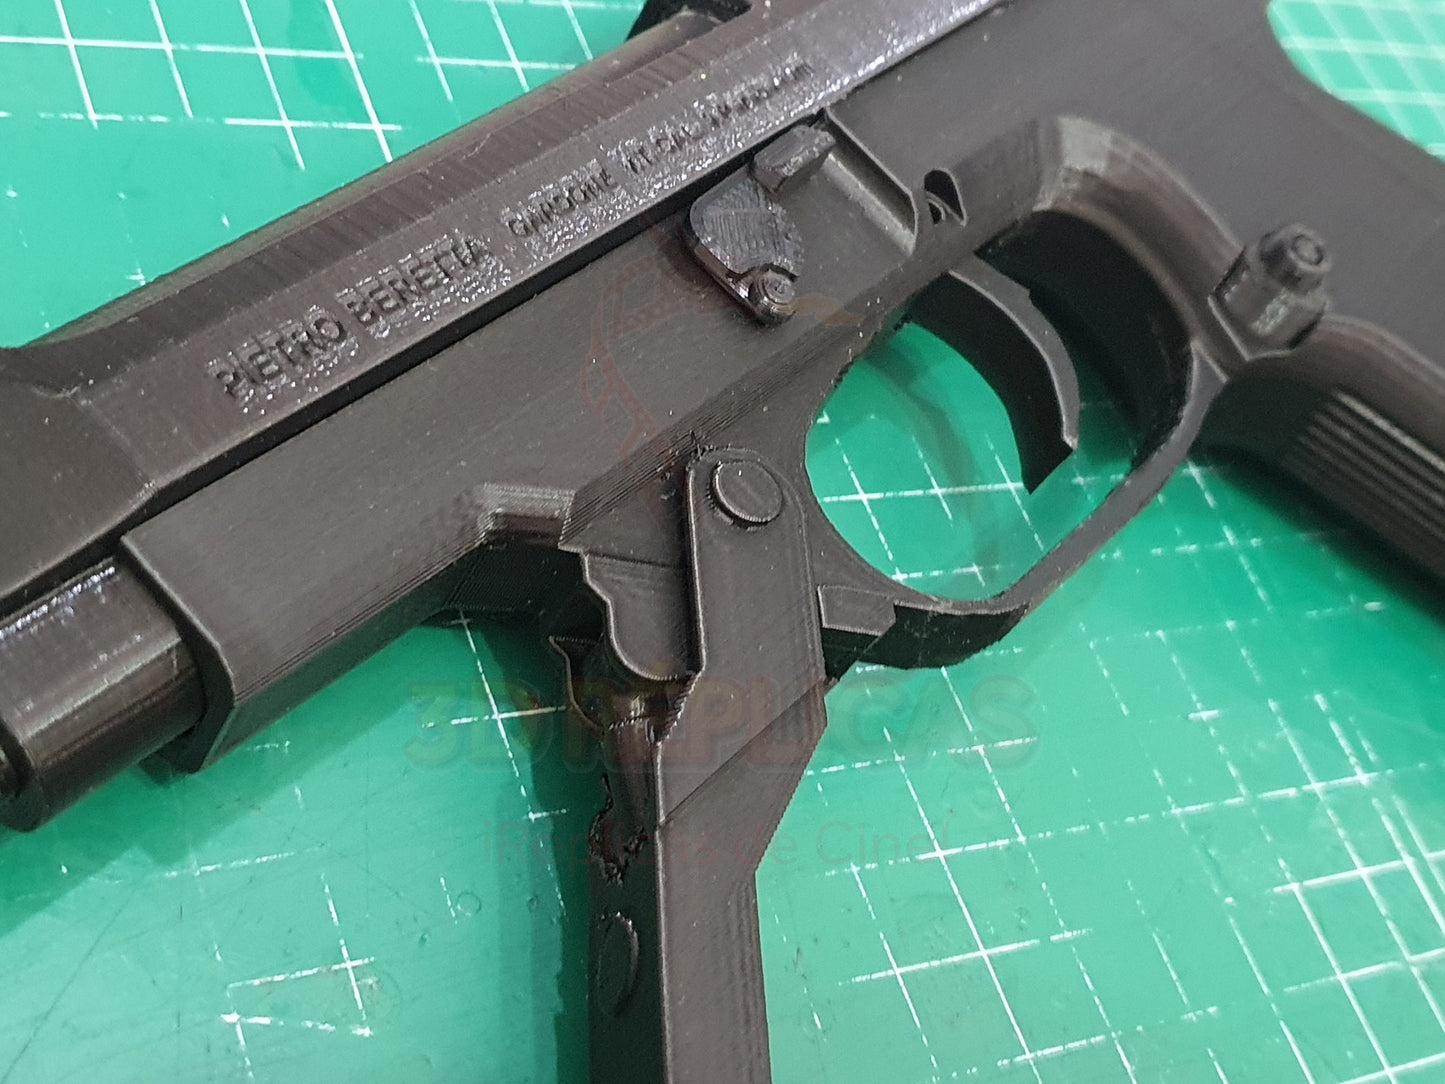 Beretta 93R Pistol Gun Prop Replica Cosplay